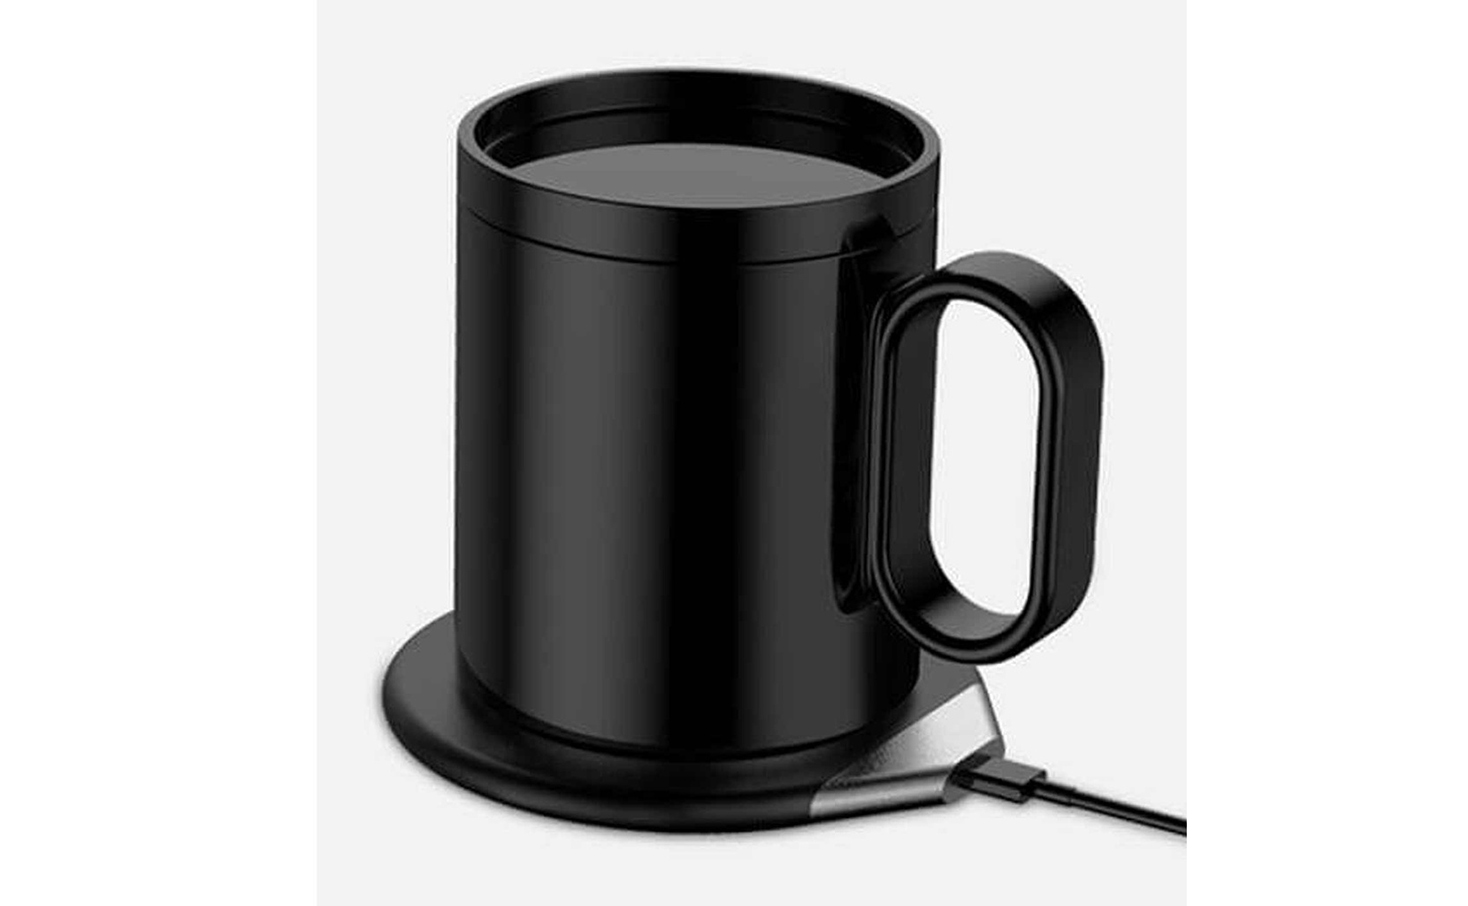 CRIVITS – Smart Mug Warmer with Wireless Charger